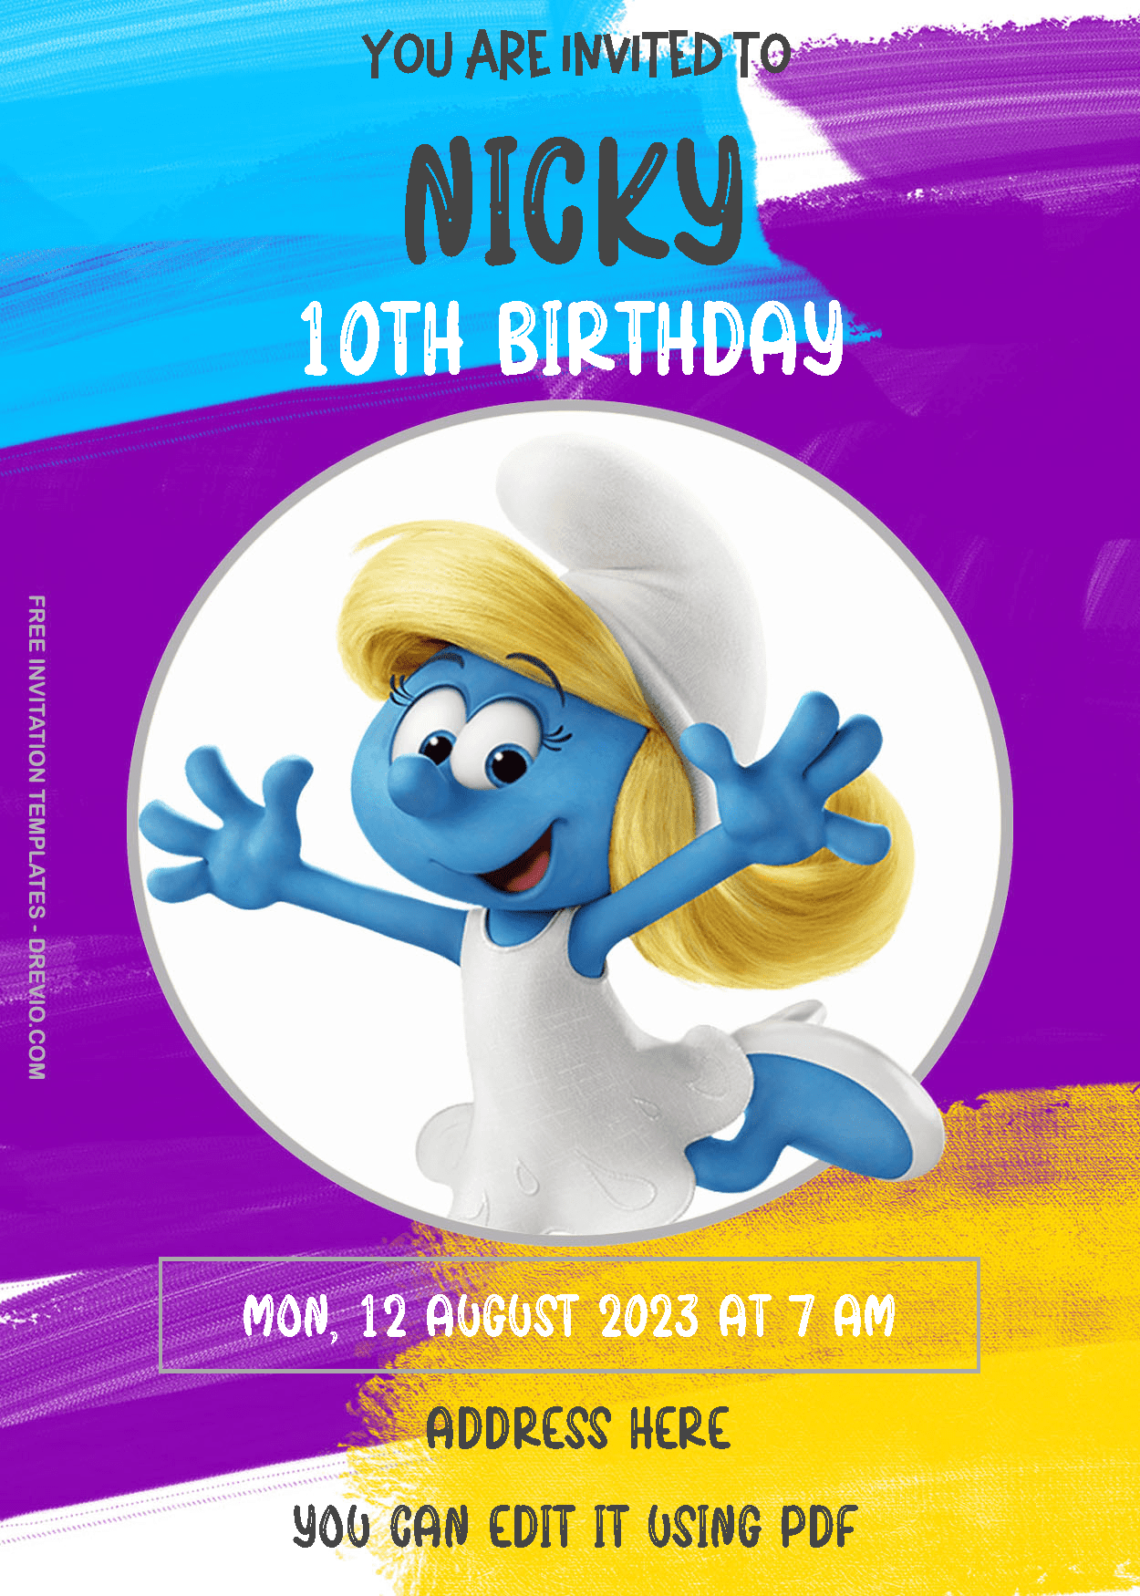 ( Free Editable PDF ) The Smurf Birthday Invitation Templates One